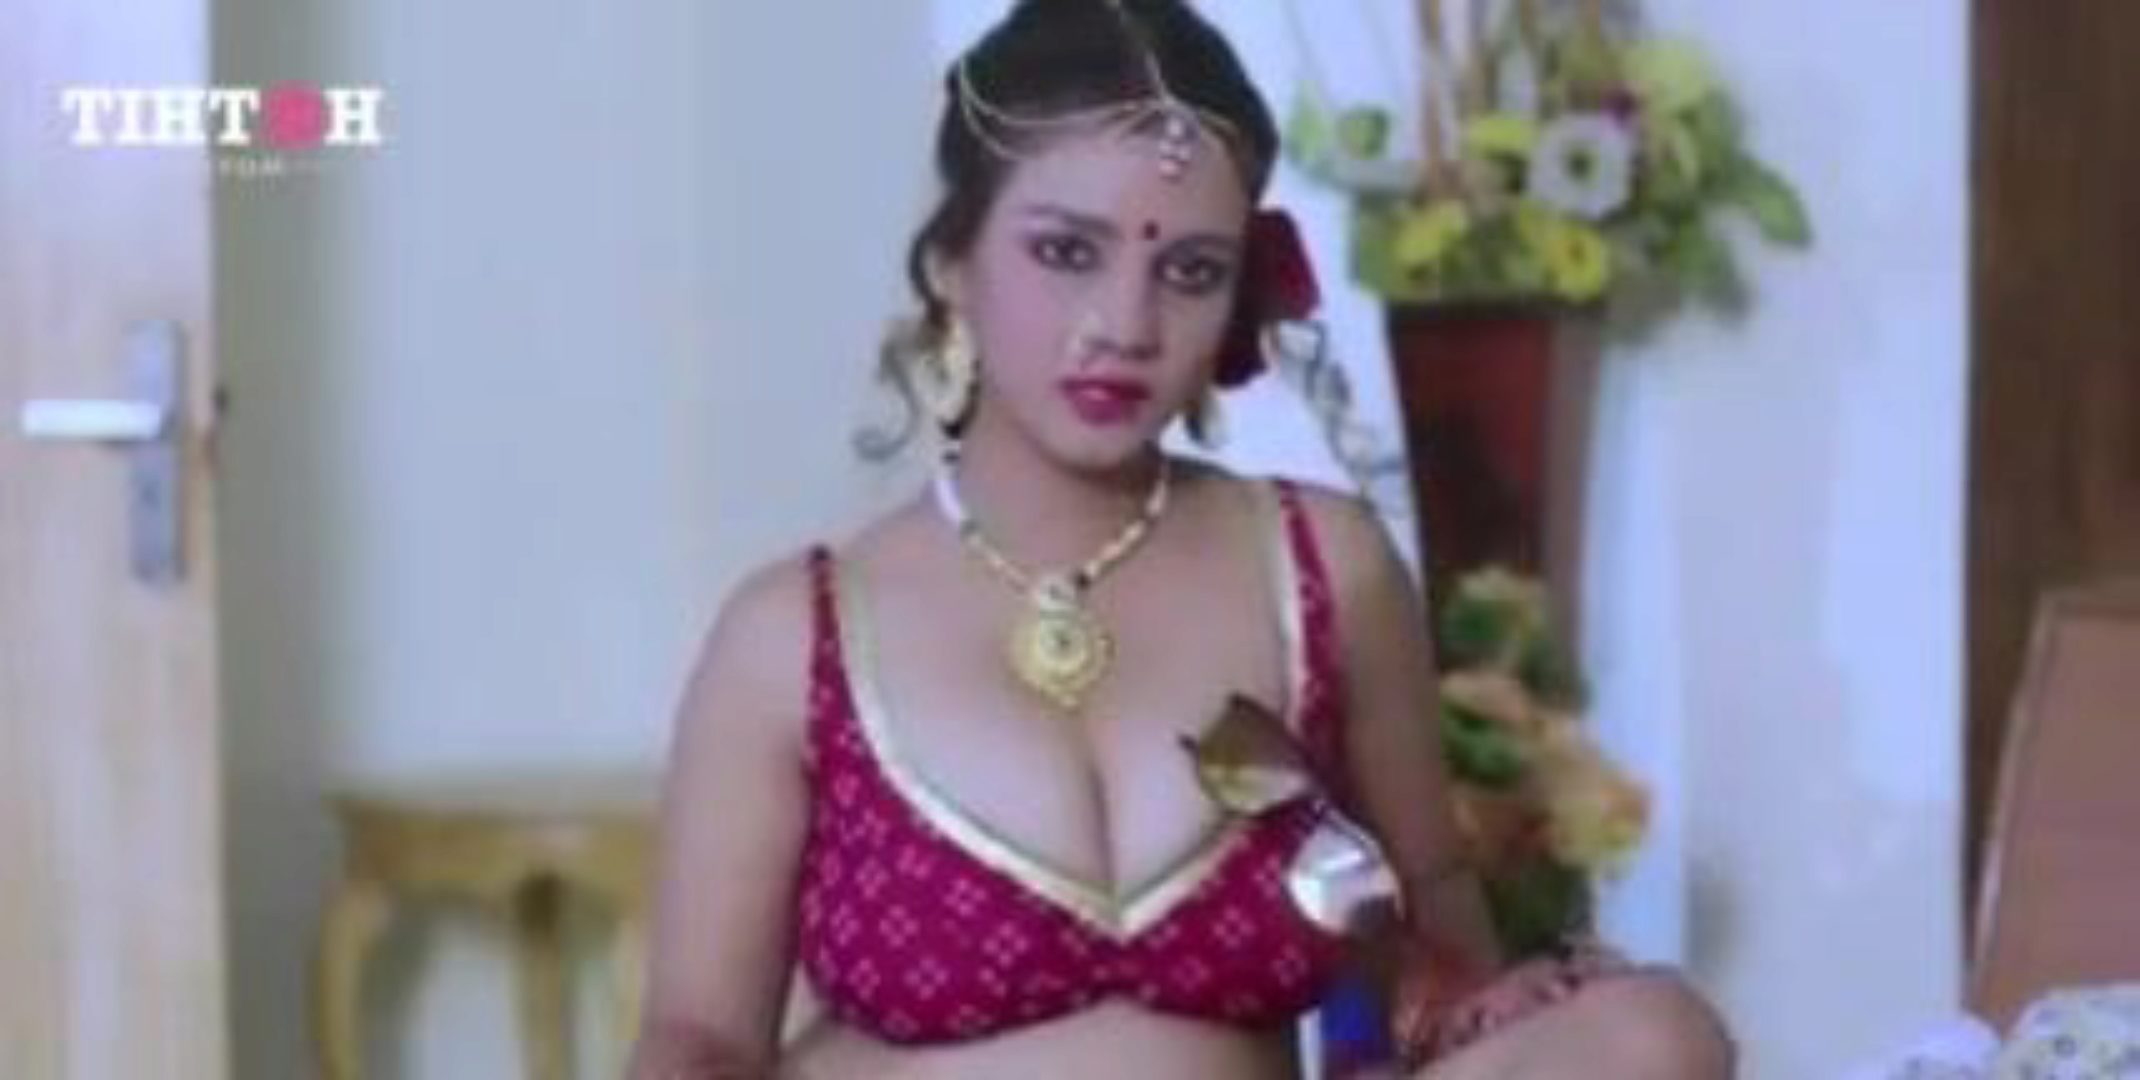 Blue Film Girls - Lahore Sexy Movies Blue Film Girls Wwerm Free Porn Tube Movies - XVDS TV